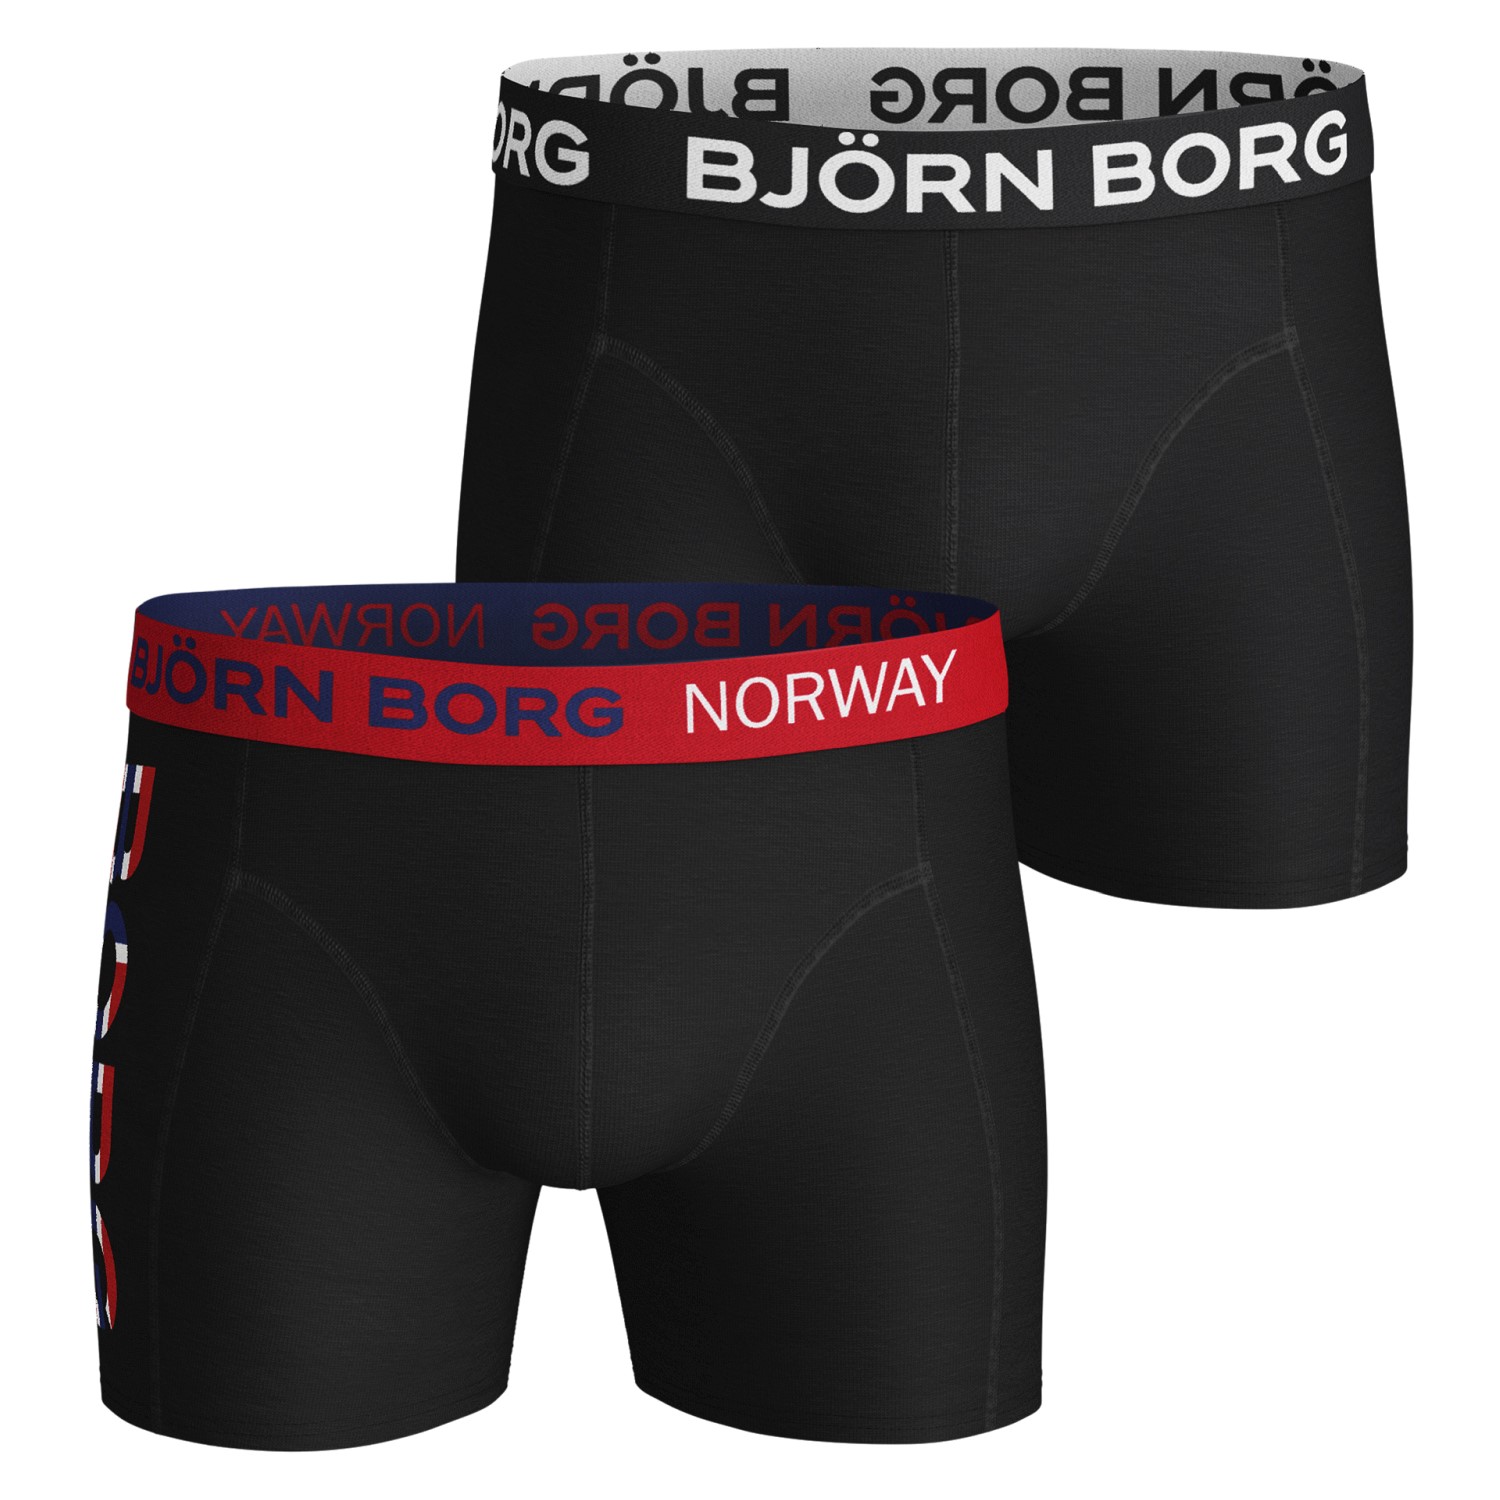 Björn Borg Nations Cotton Stretch Shorts Norway